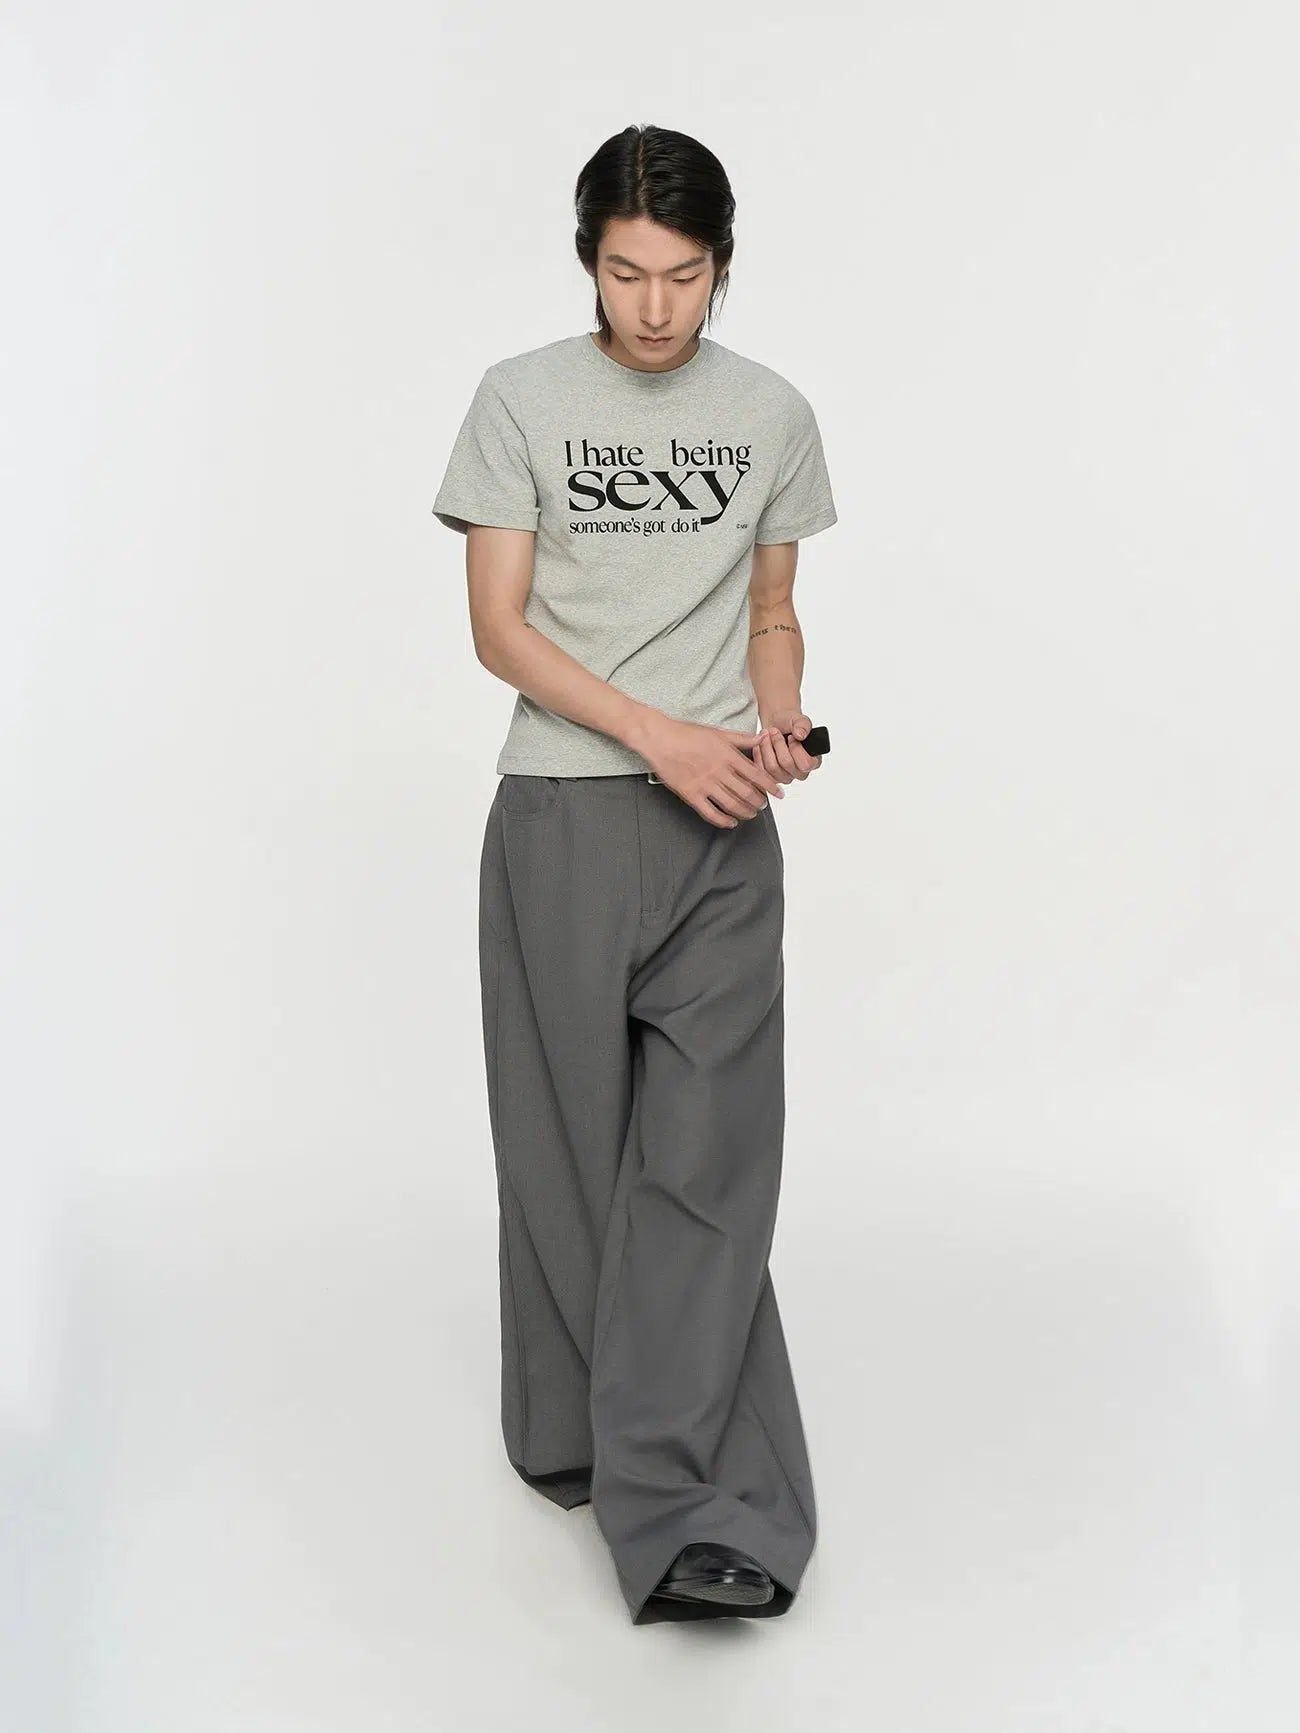 Sexy Slogan T-Shirt Korean Street Fashion T-Shirt By NFAI Shop Online at OH Vault